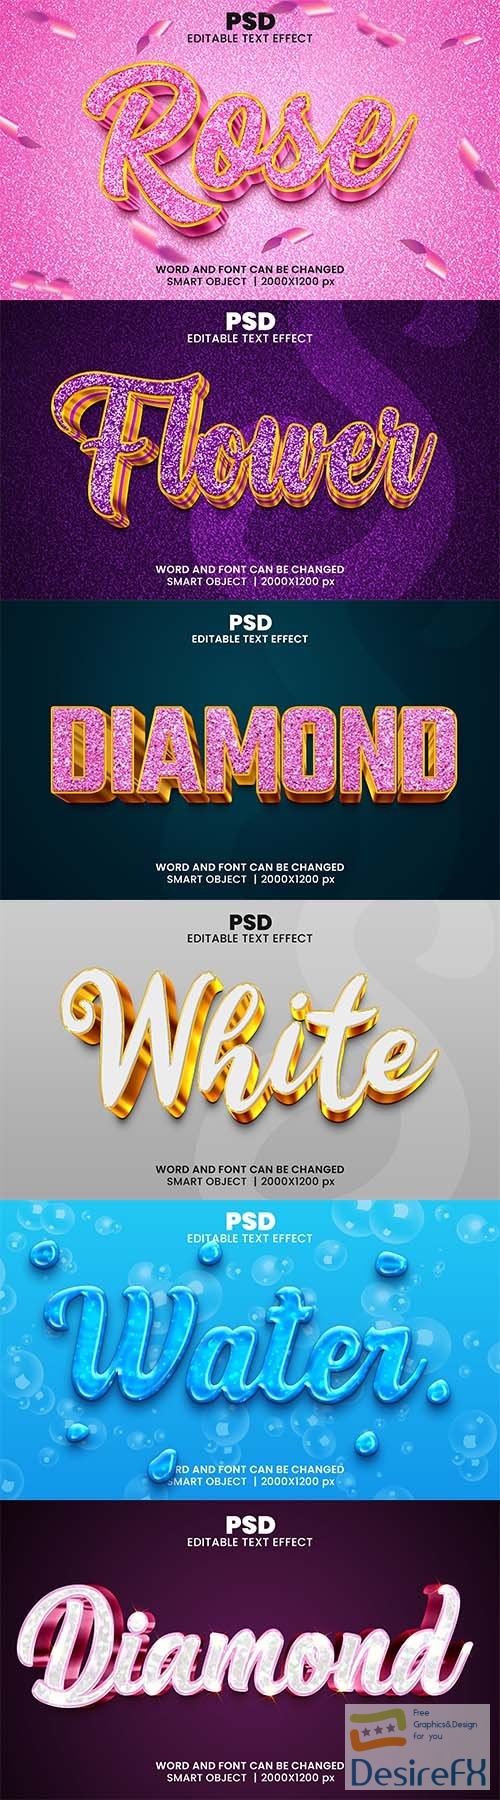 Psd style text effect editable set vol 6